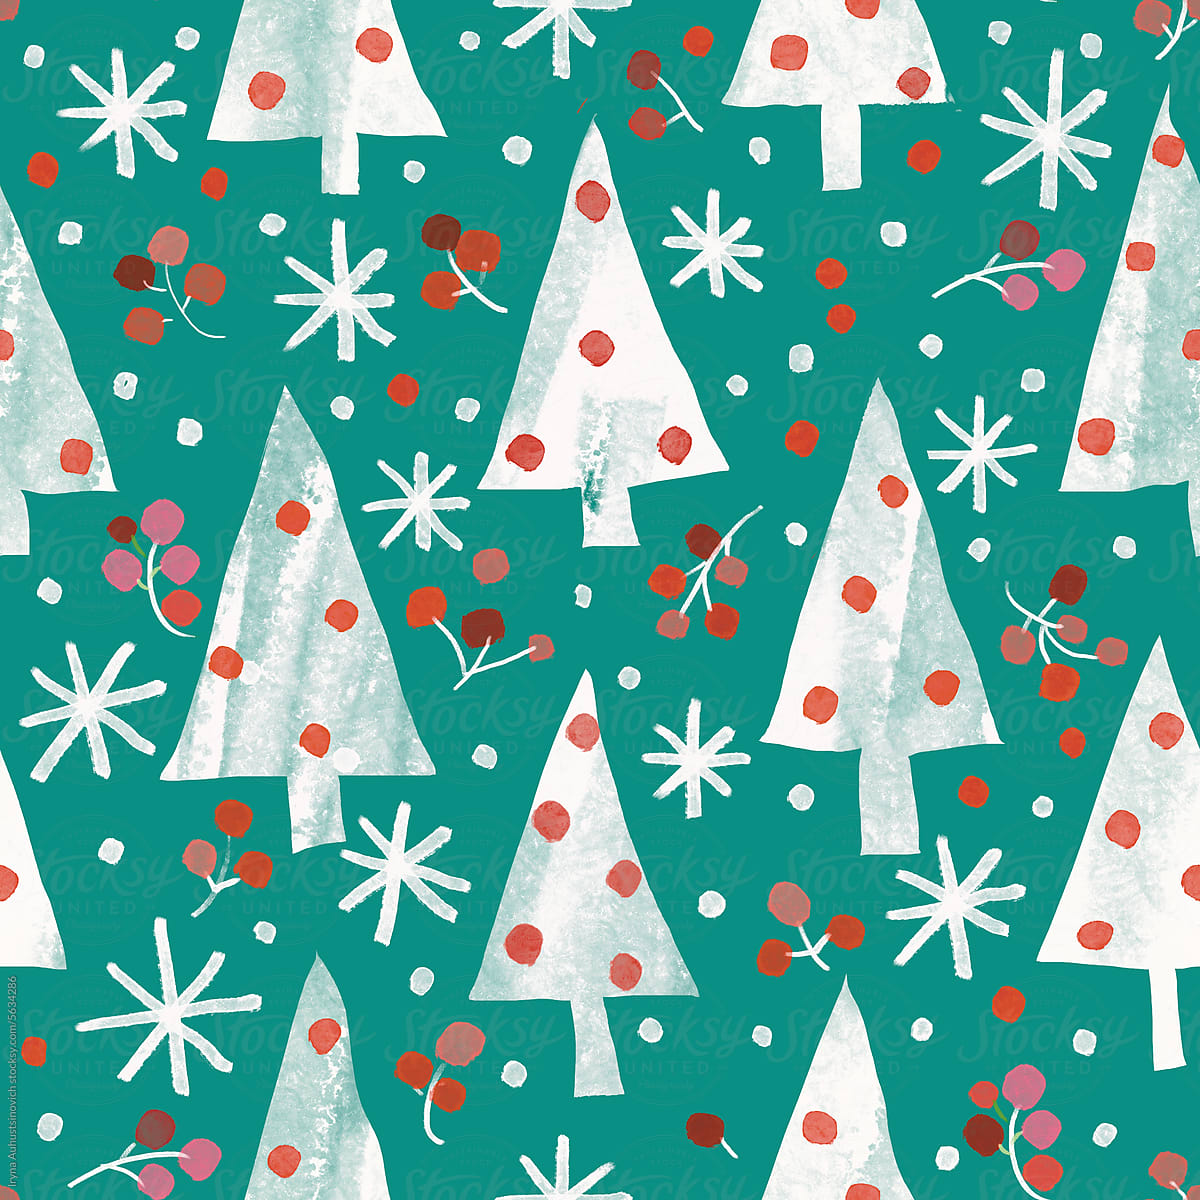 holidays CARD with Christmas tree